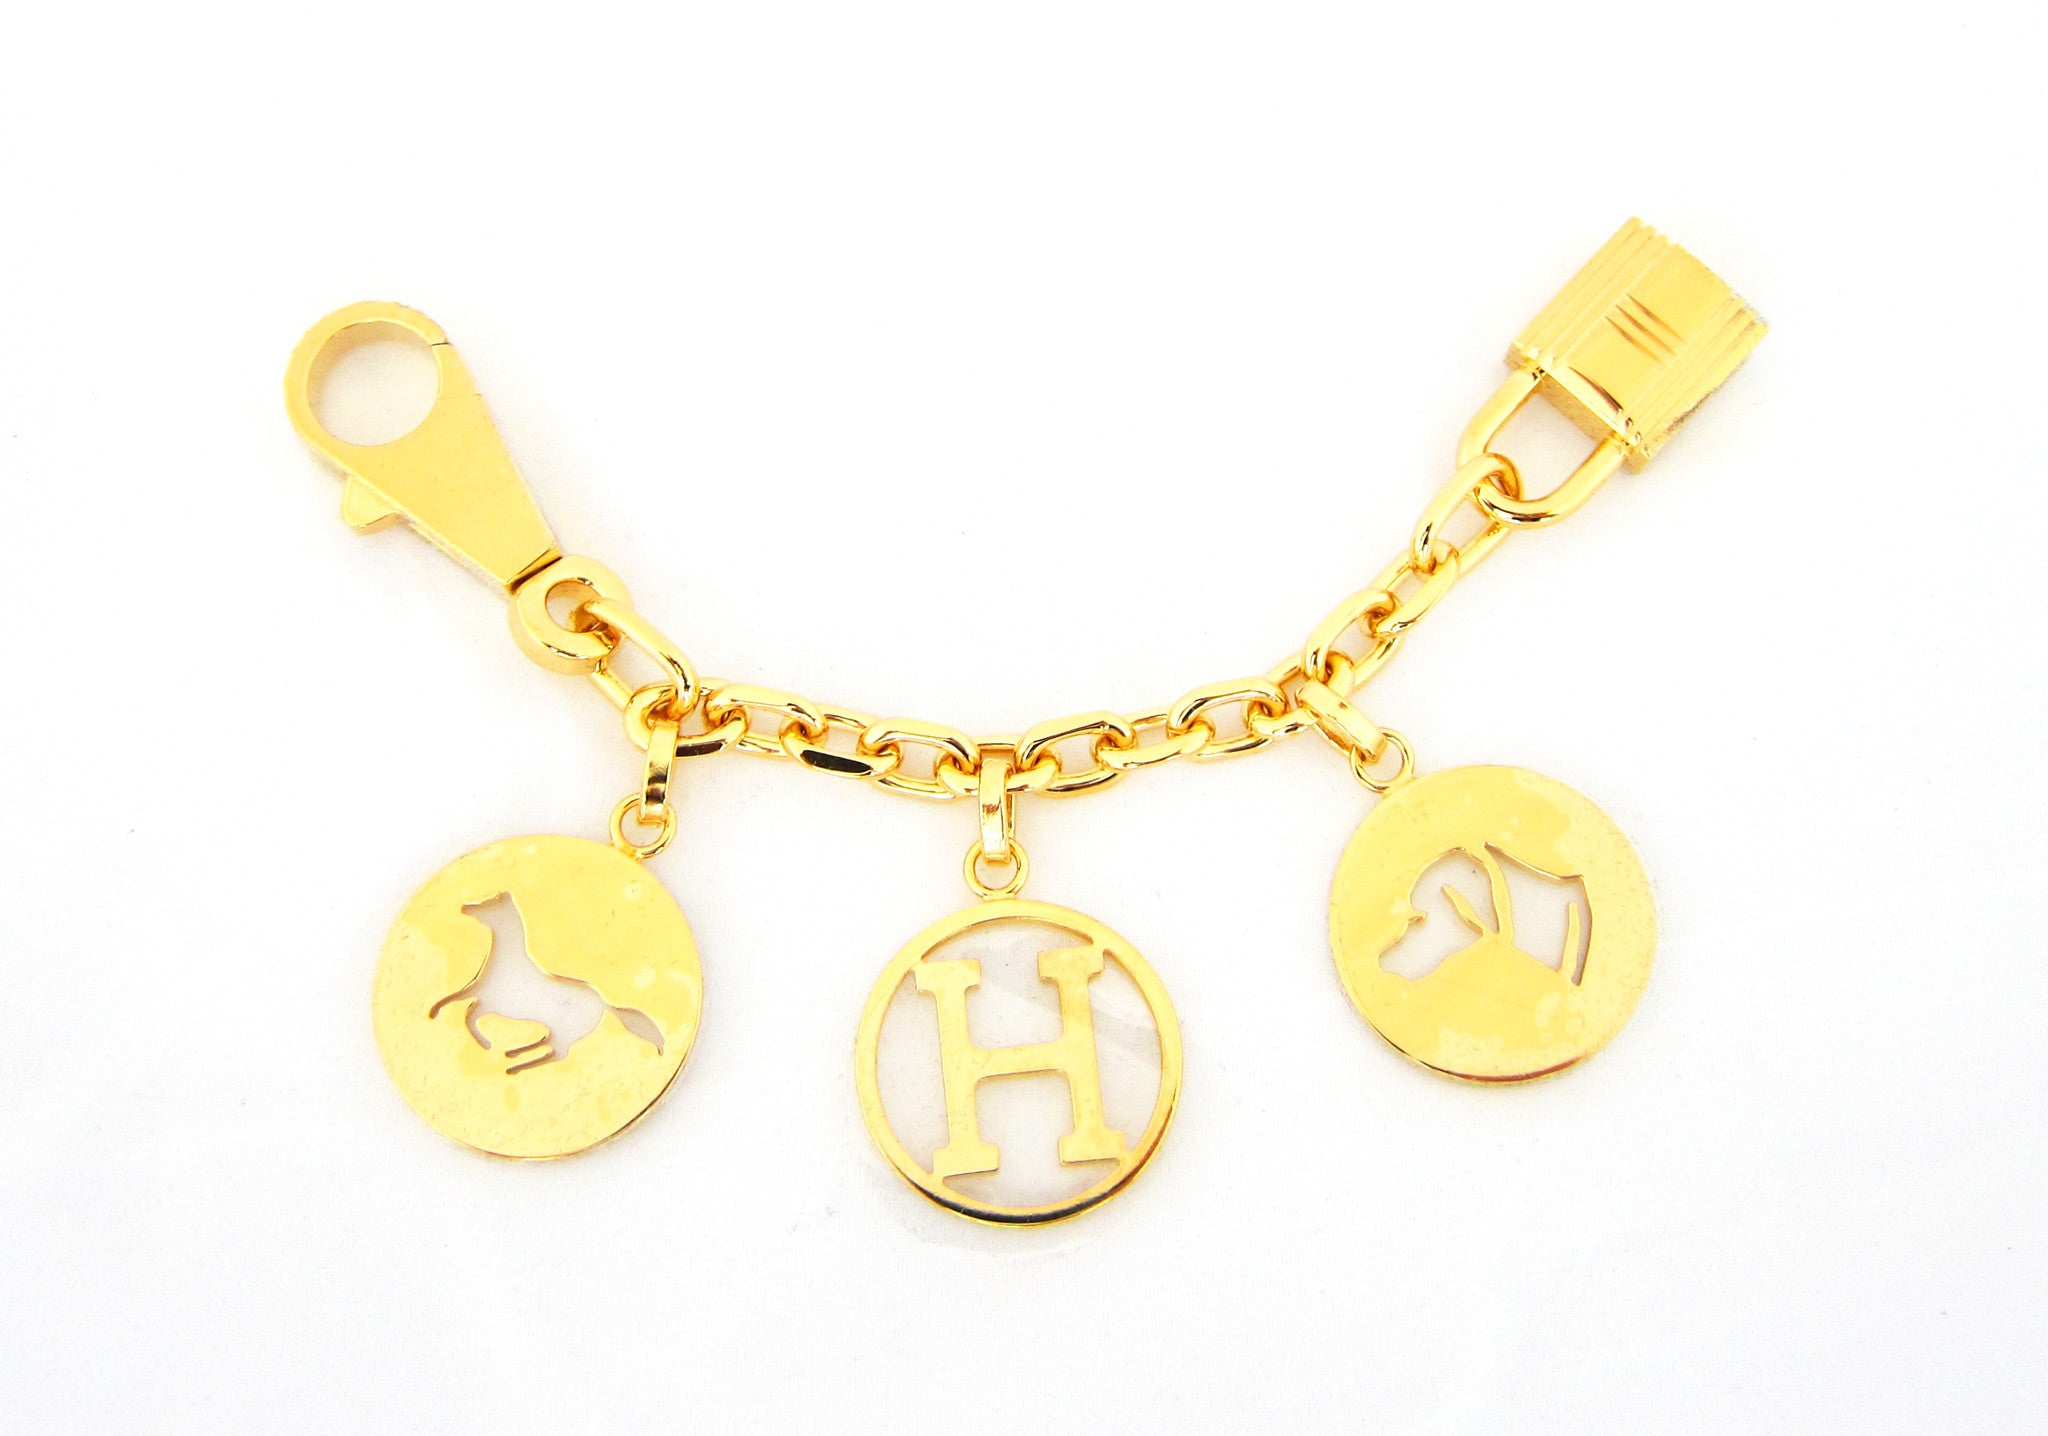 Hermes Breloque Charm Gold for Birkin or Kelly Bag